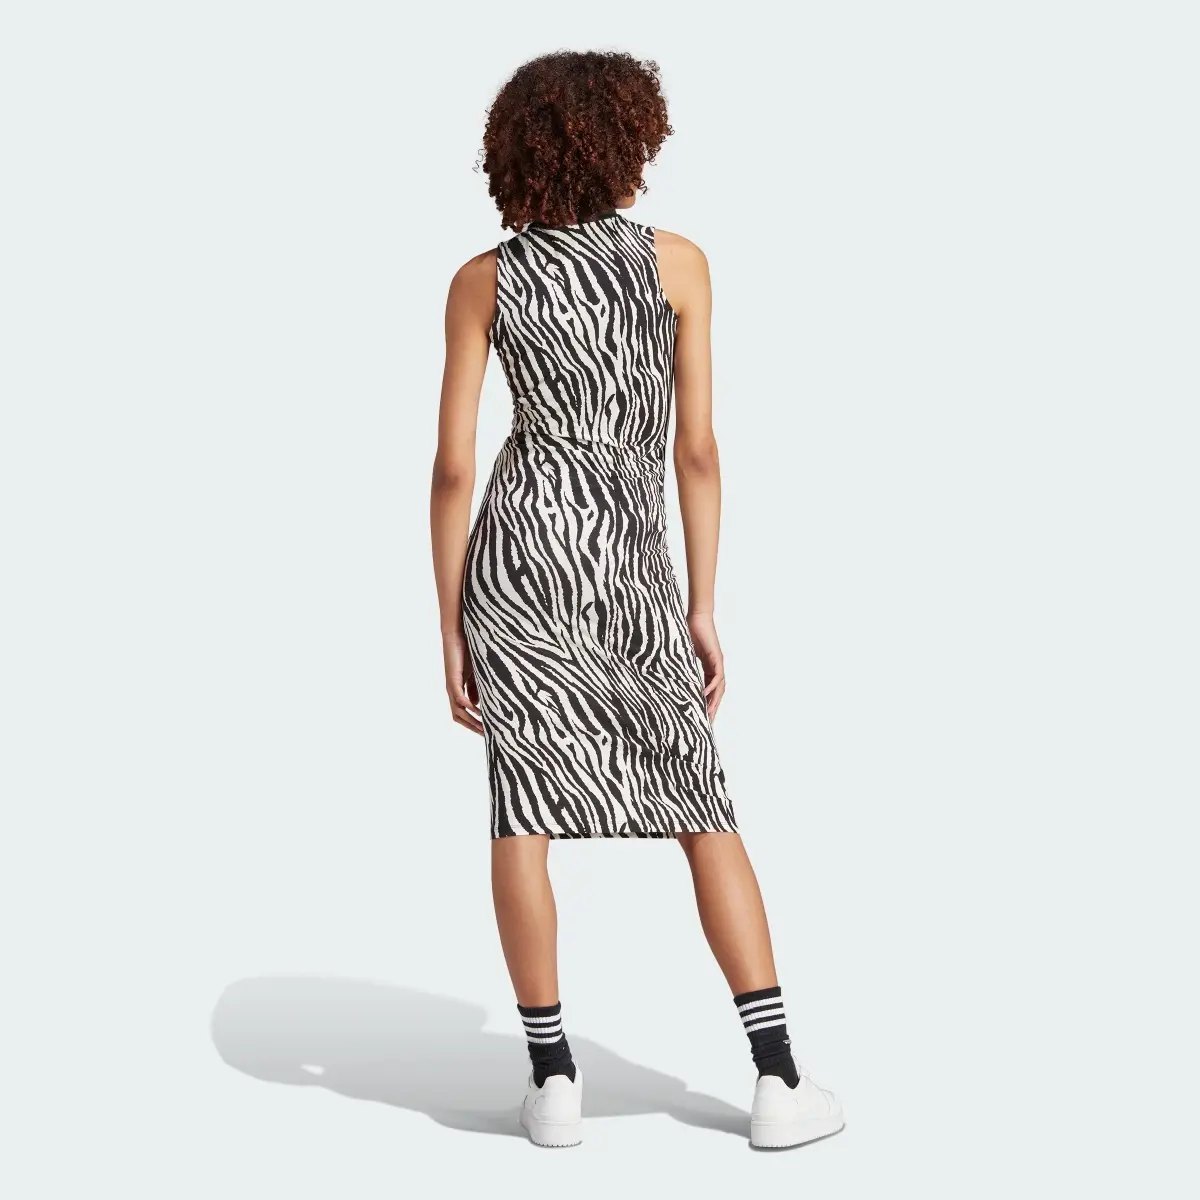 Adidas Vestido Allover Zebra Animal Print. 3